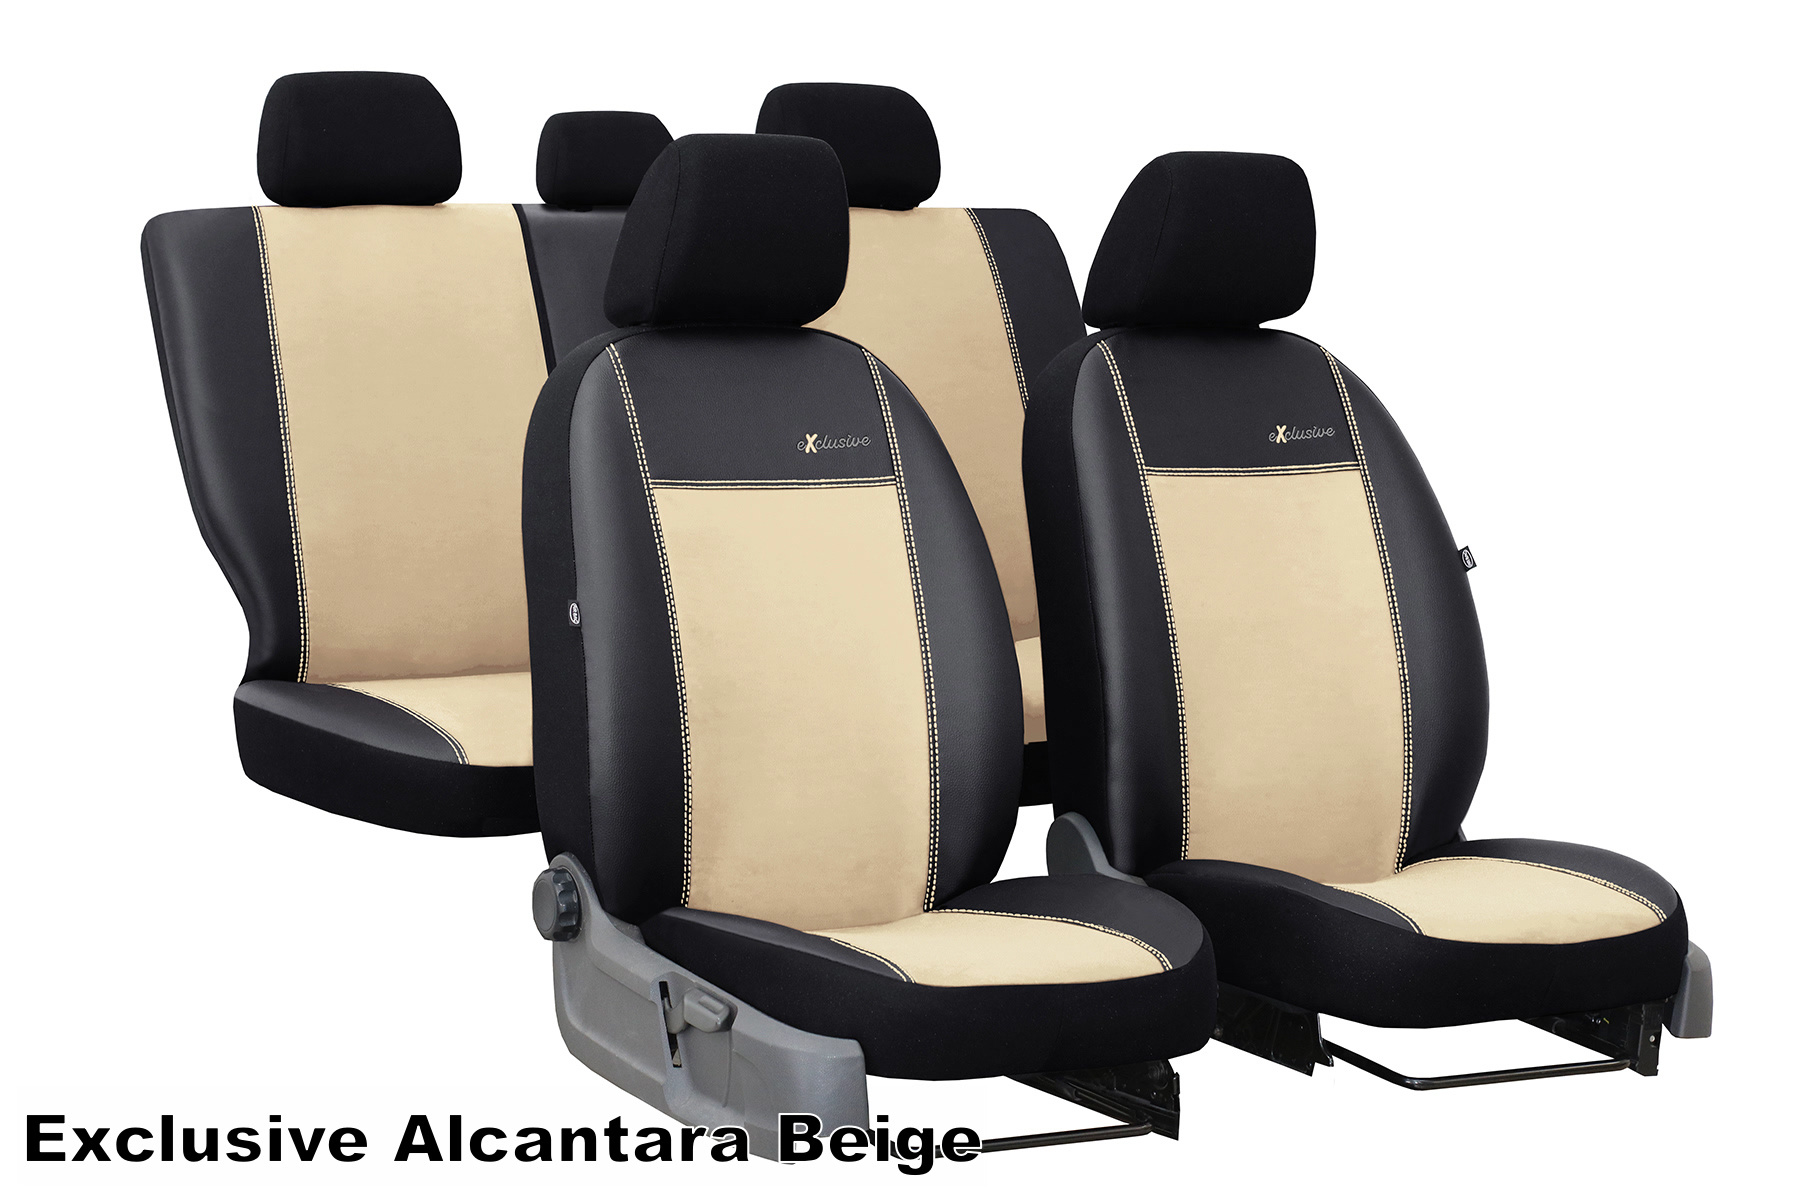 Maßgefertigter Autositzbezug Exclusive für VW Tiguan Amarok